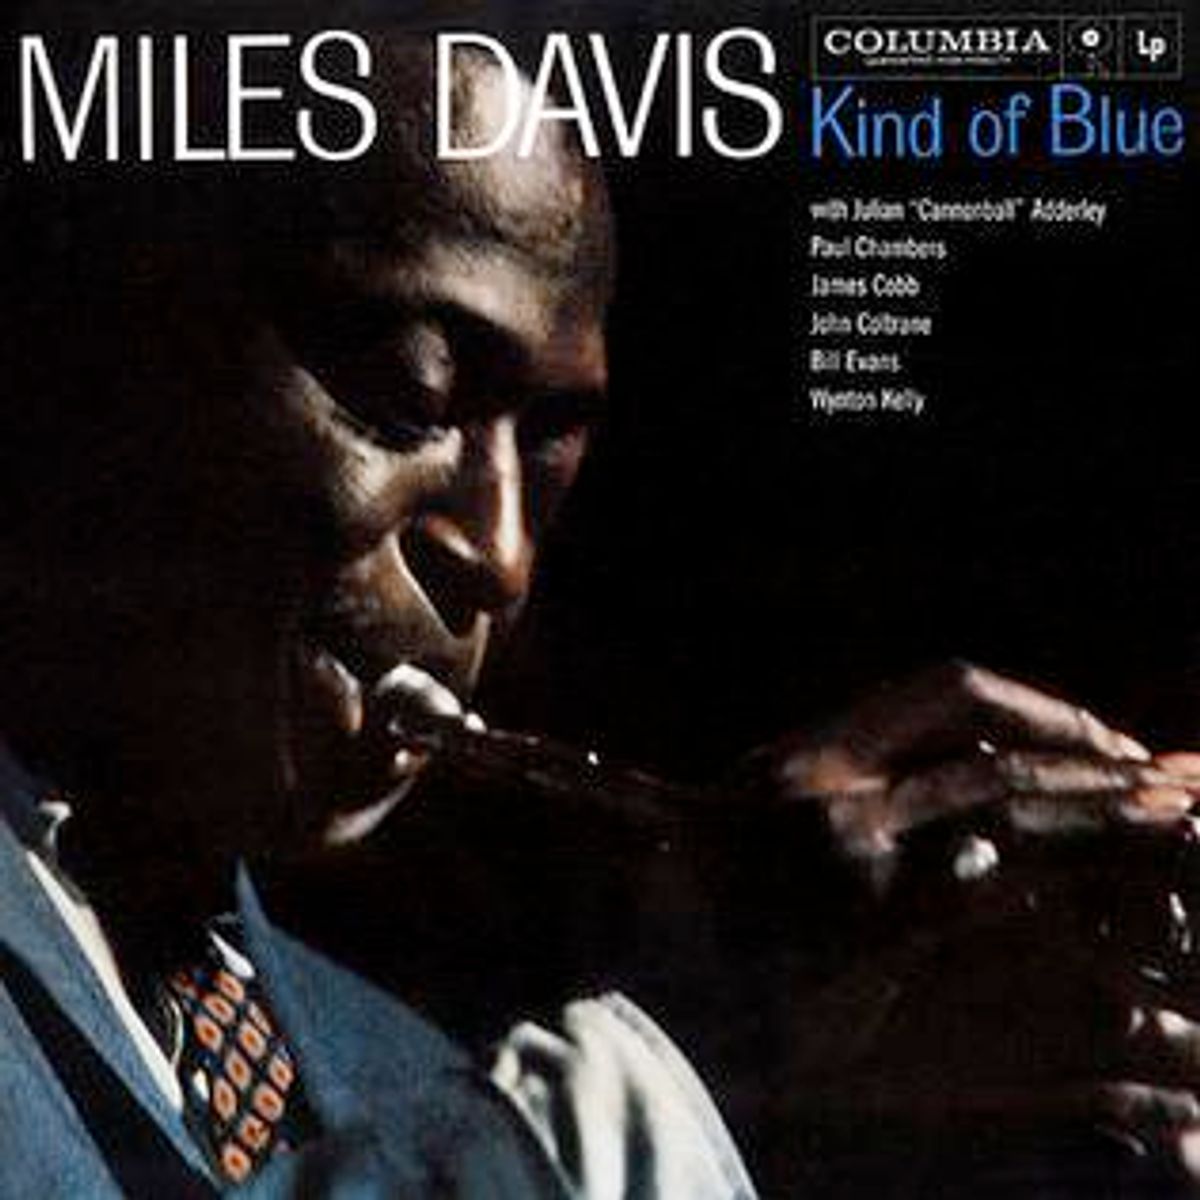 #ItsJazz - Miles Davis - So What (1959)